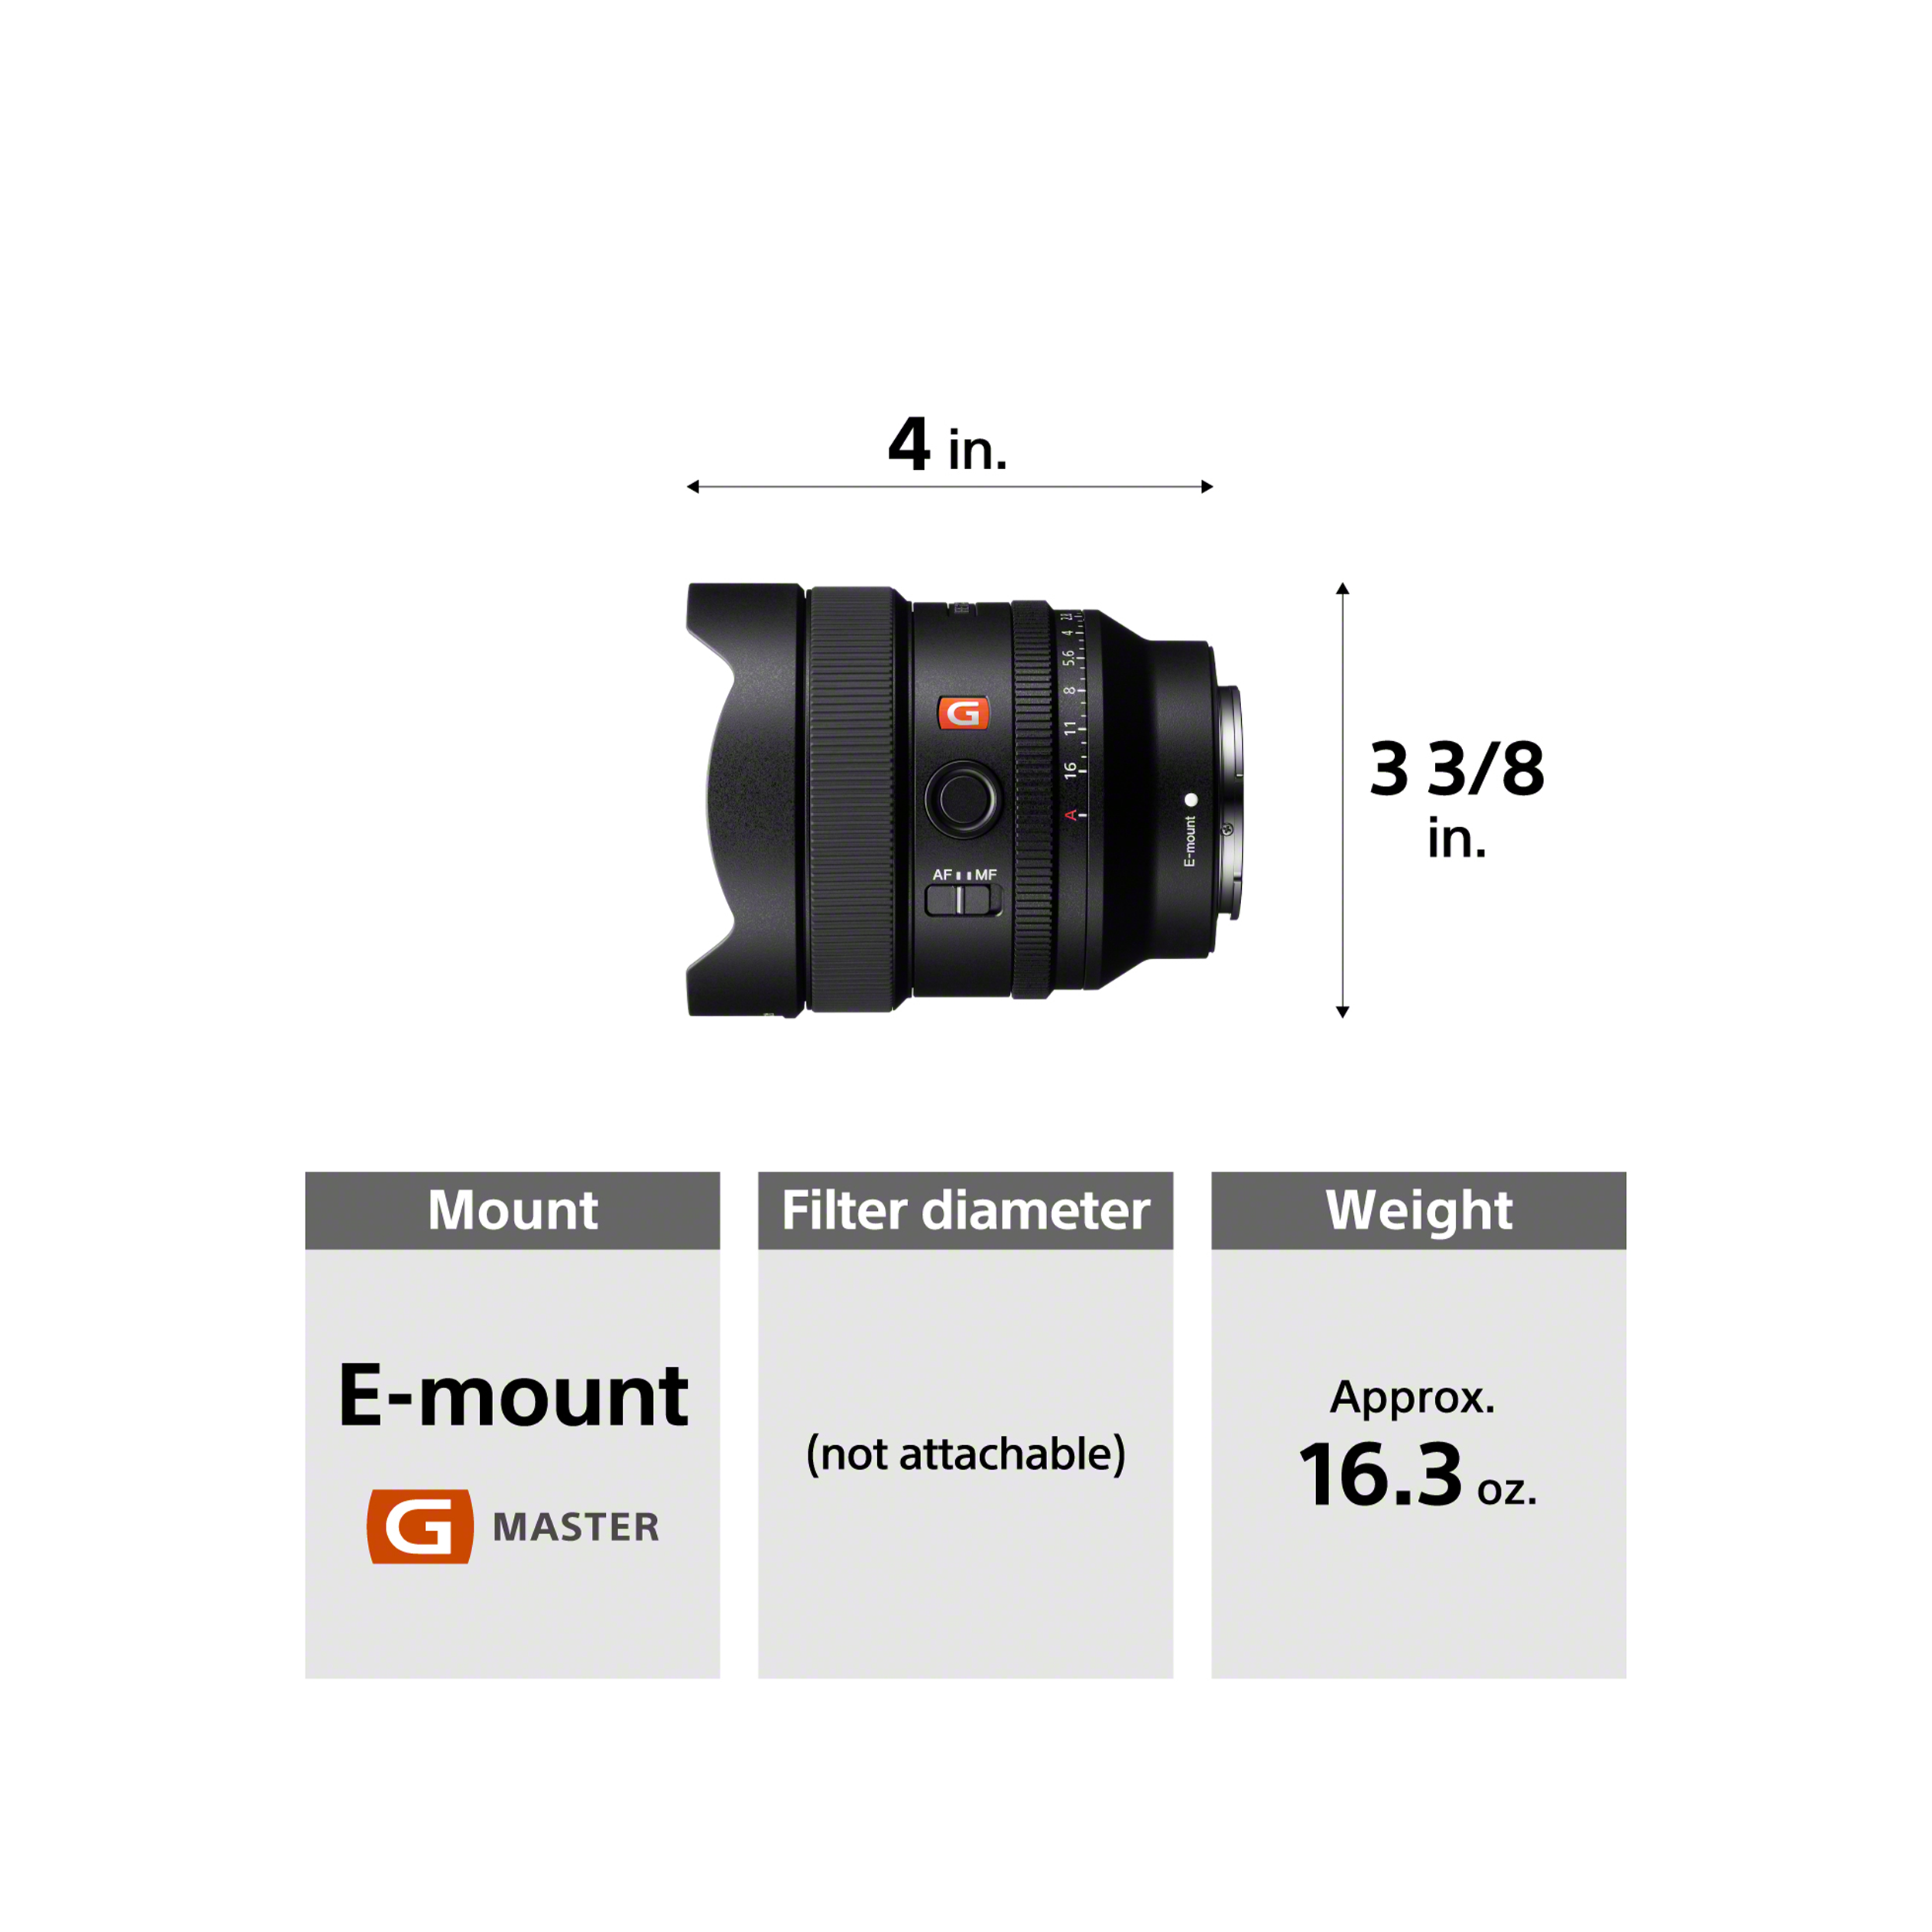 Sony SEL14F18GM FE 14mm F1.8 GM Full-frame Large-aperture Wide Angle Prime G Master Lens